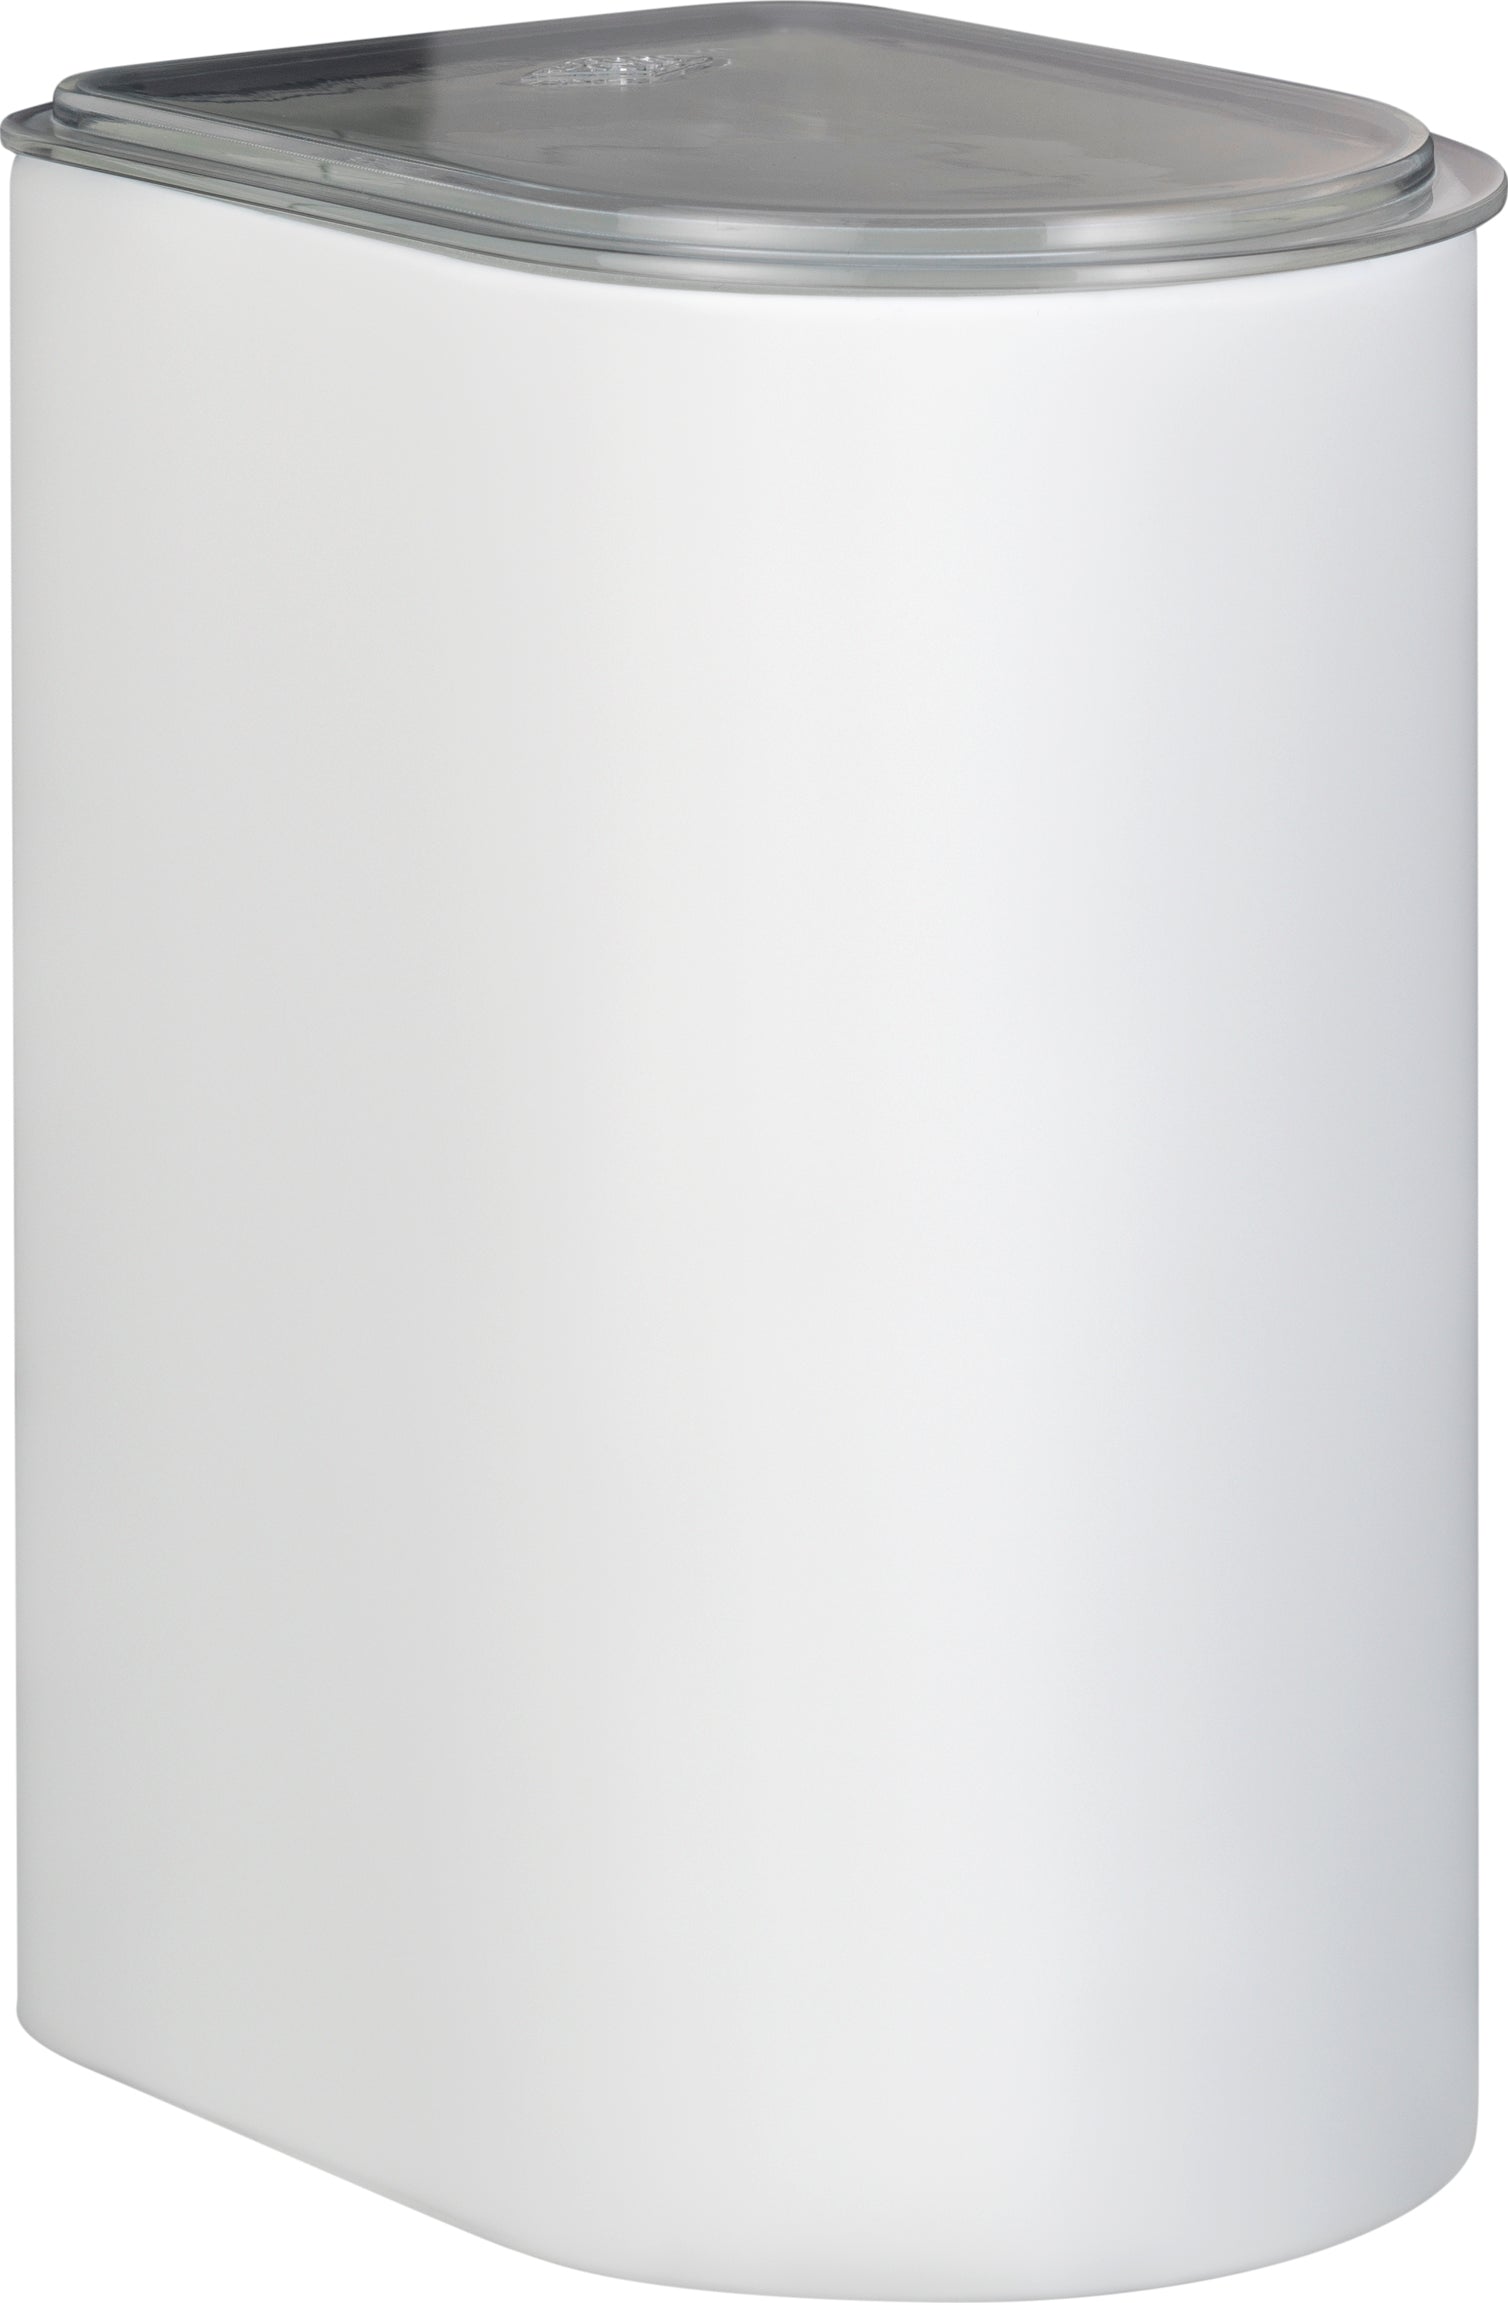 Wesco Canister de 3 litros con tapa acrílica, Matt blanco